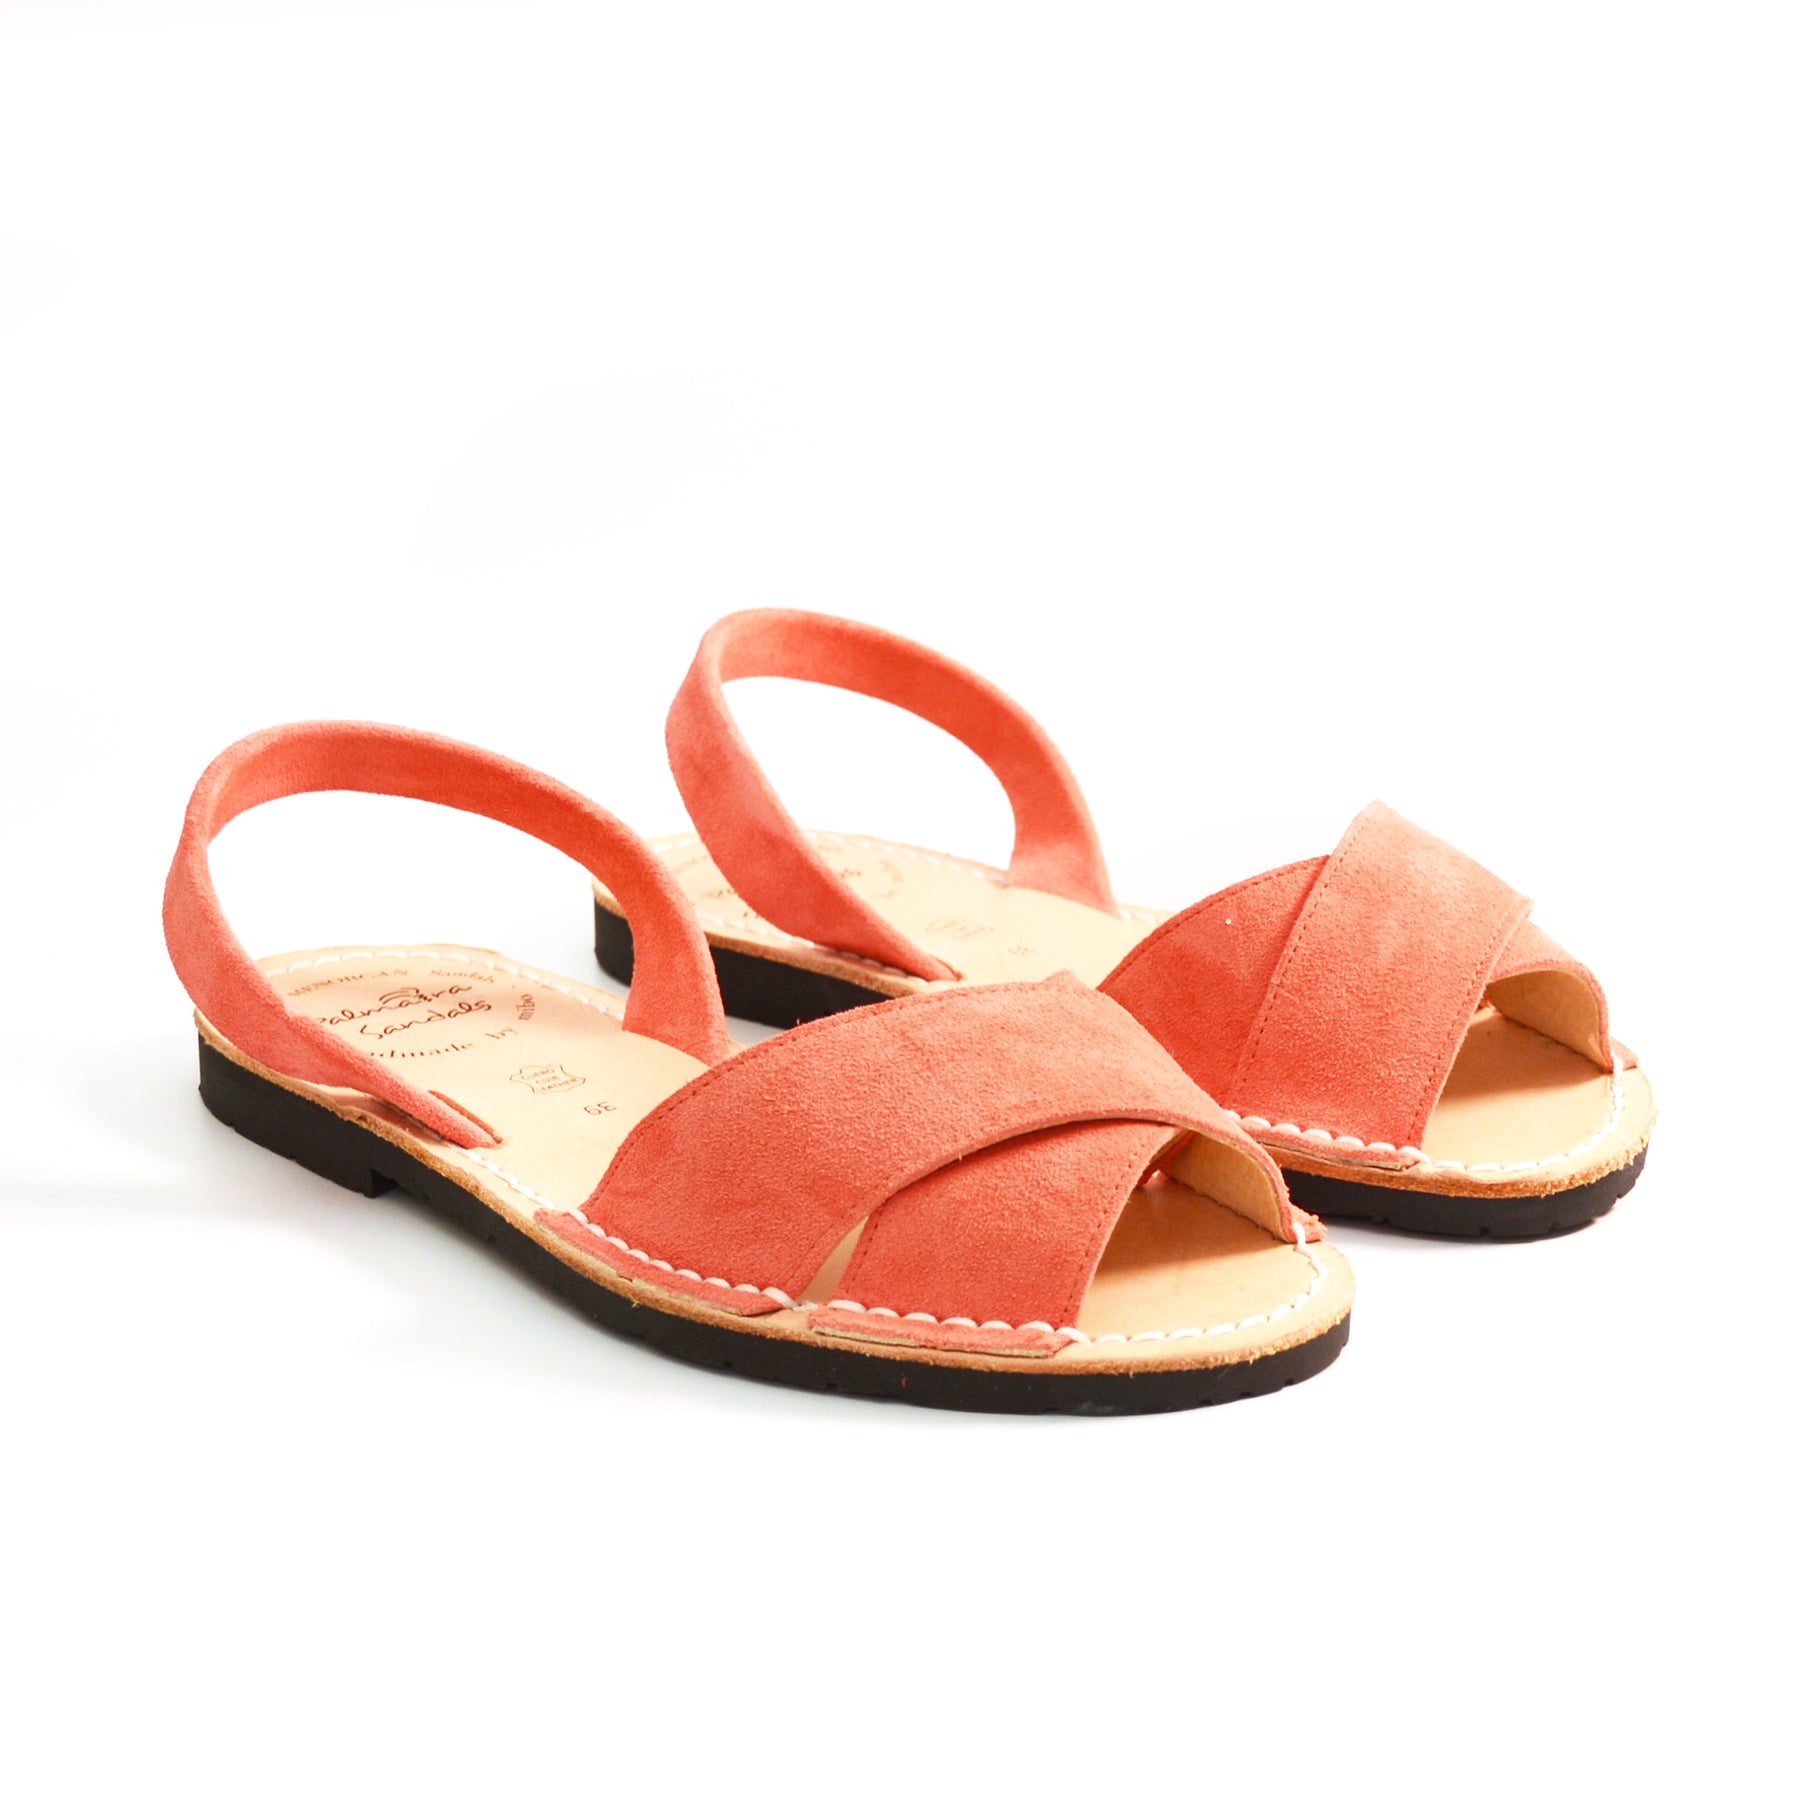 orange suede slingback peeptoe crossover avarcas spanish menorcan sandals